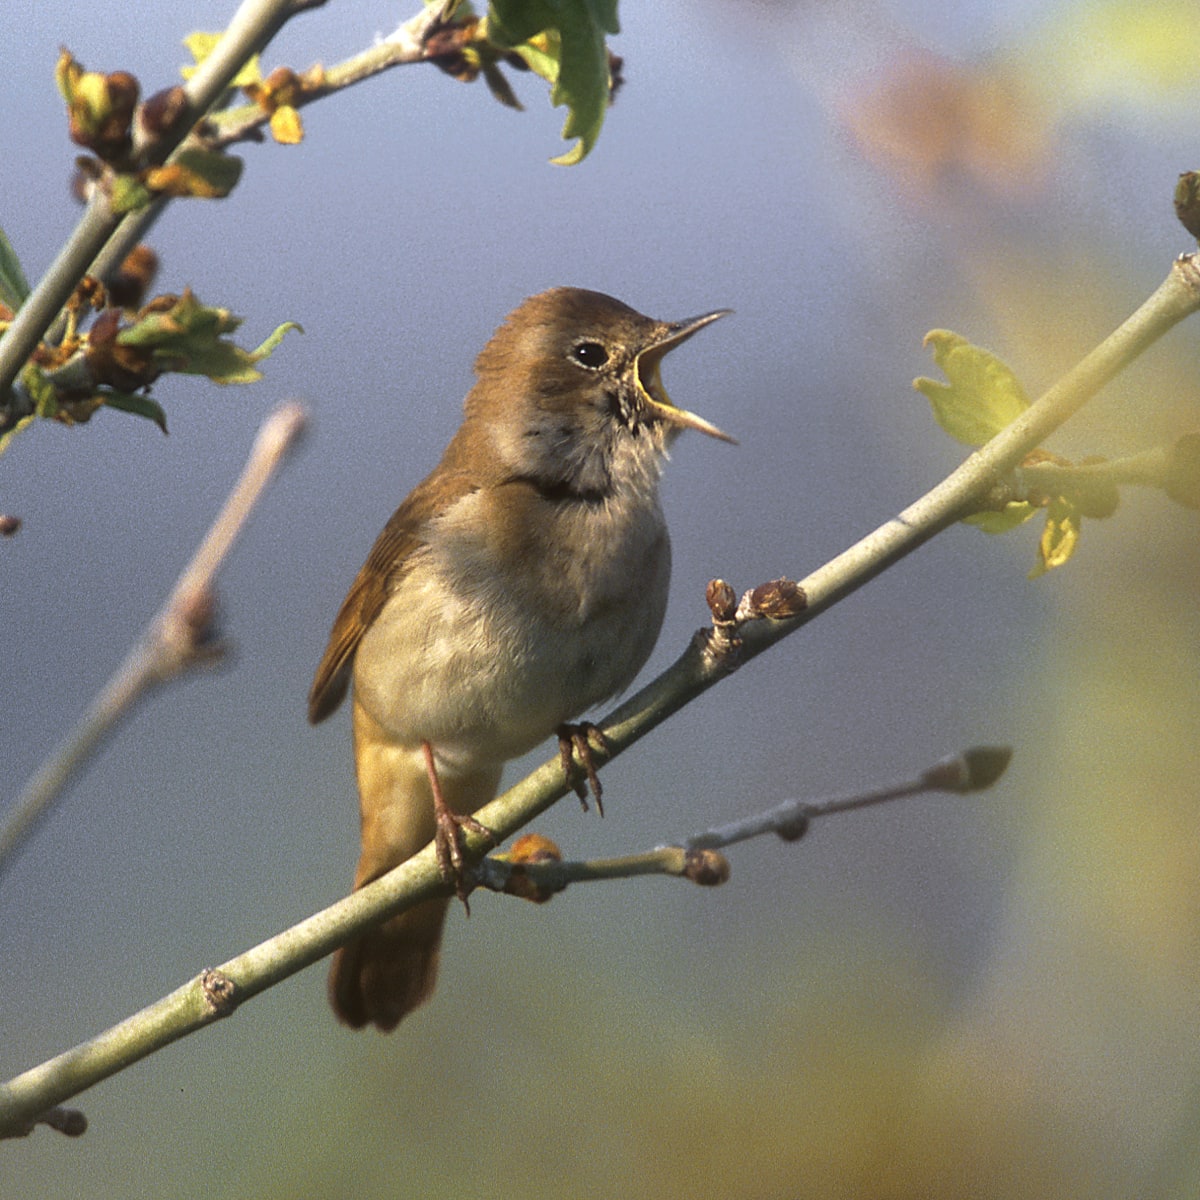 Bird sounds. Singing nightingale. Amazing bird song 